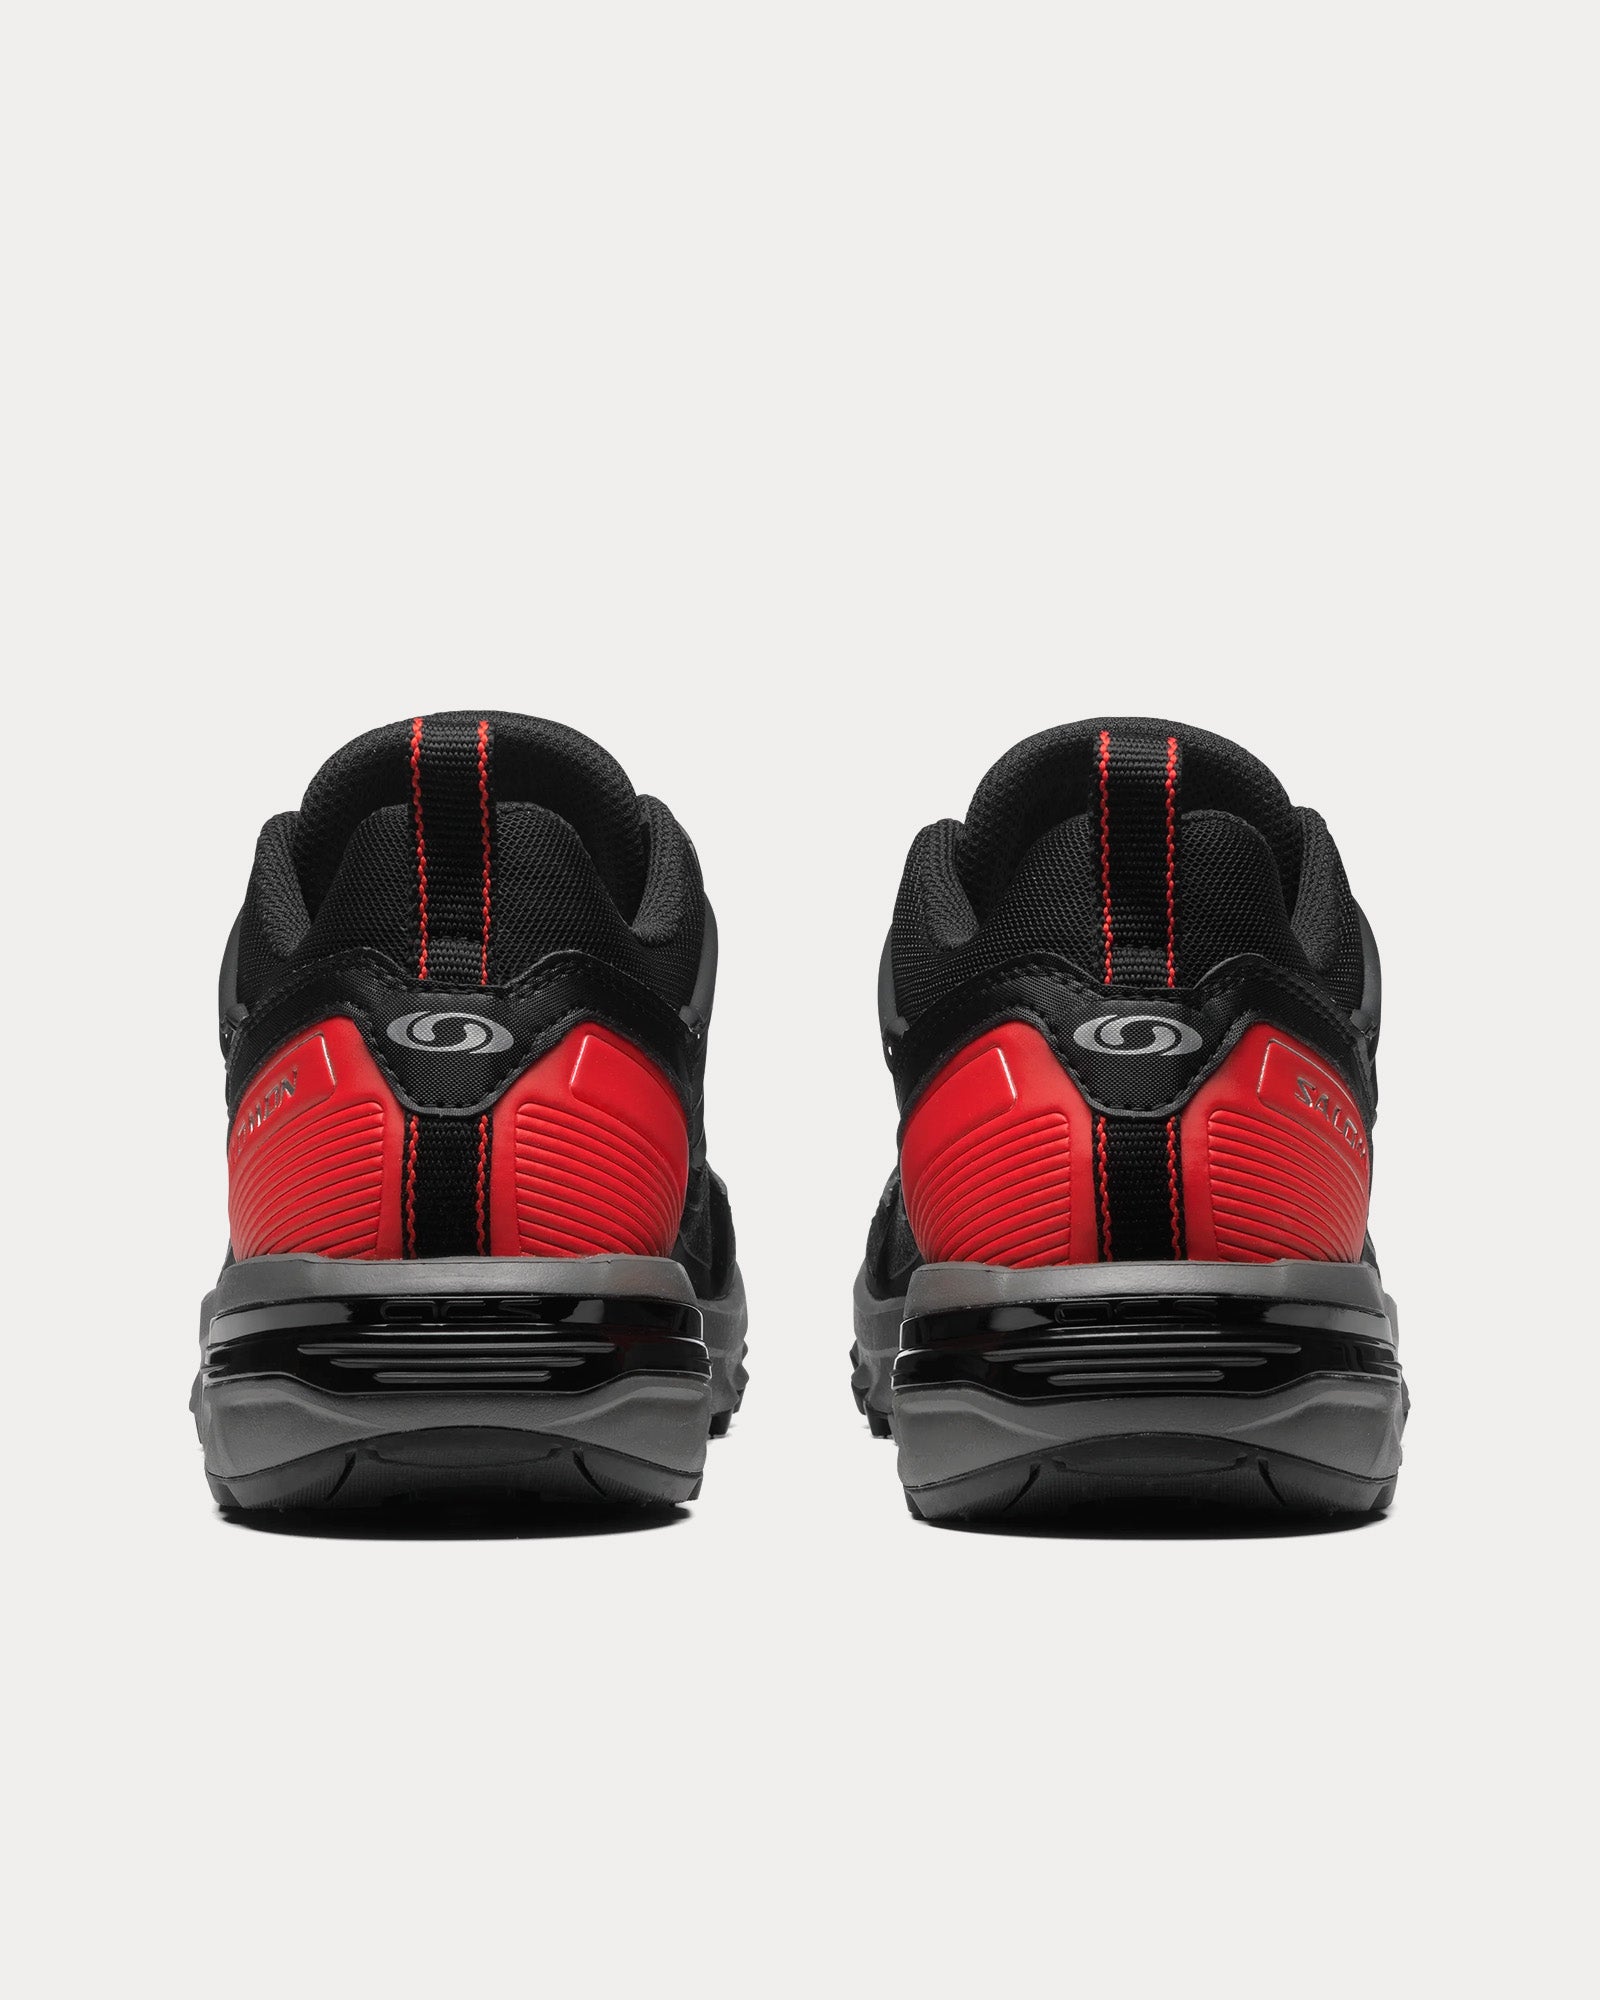 Salomon - ACS + Black / Aurora Red / White Low Top Sneakers